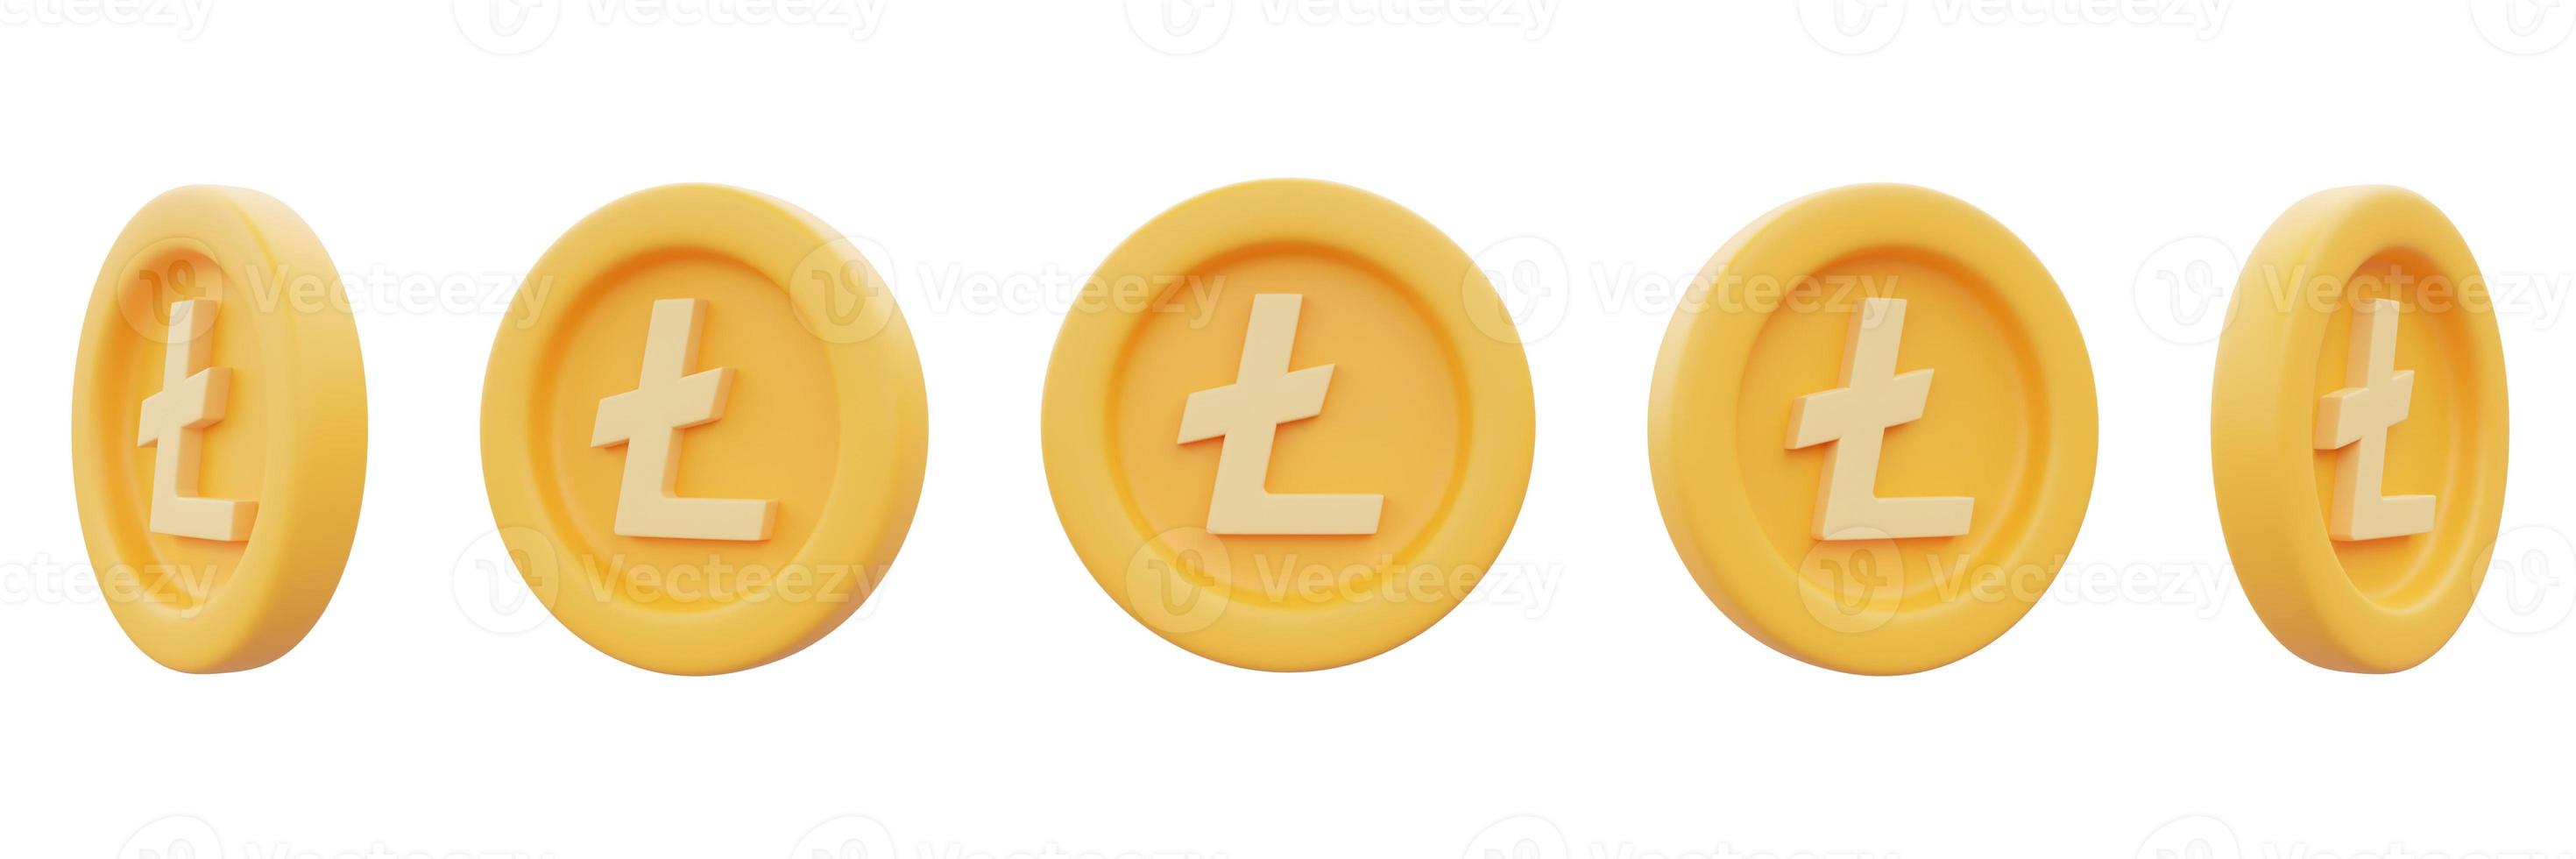 conjunto de moedas litecoin douradas isoladas em fundo branco, criptomoeda, tecnologia blockchain, renderização minimalista de style.3d. foto